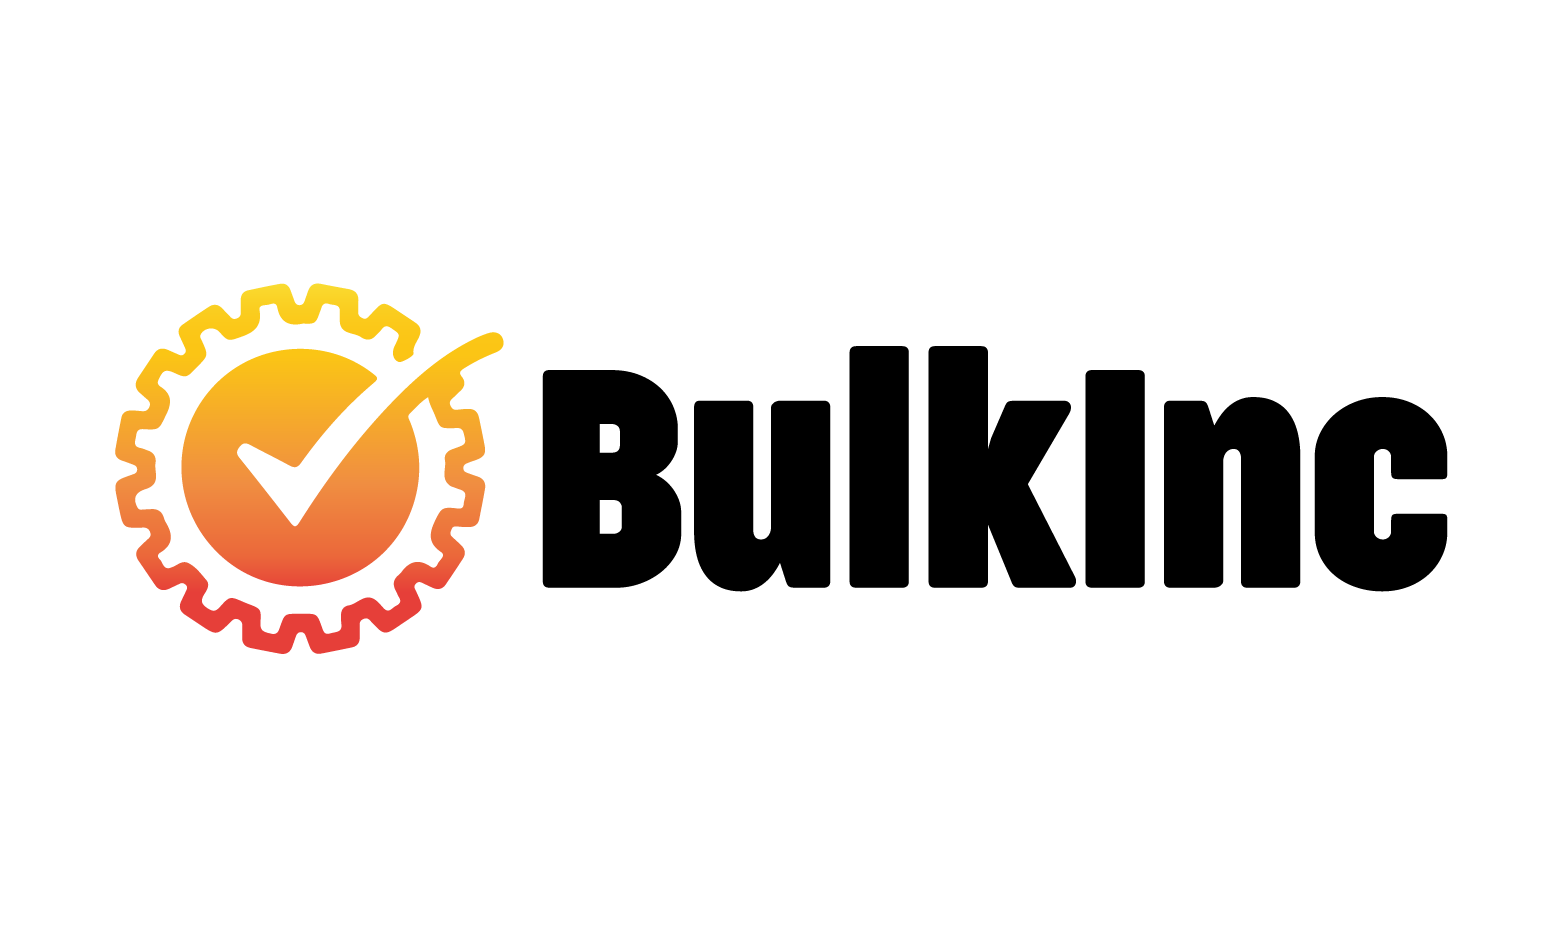 BulkInc.com - Creative brandable domain for sale